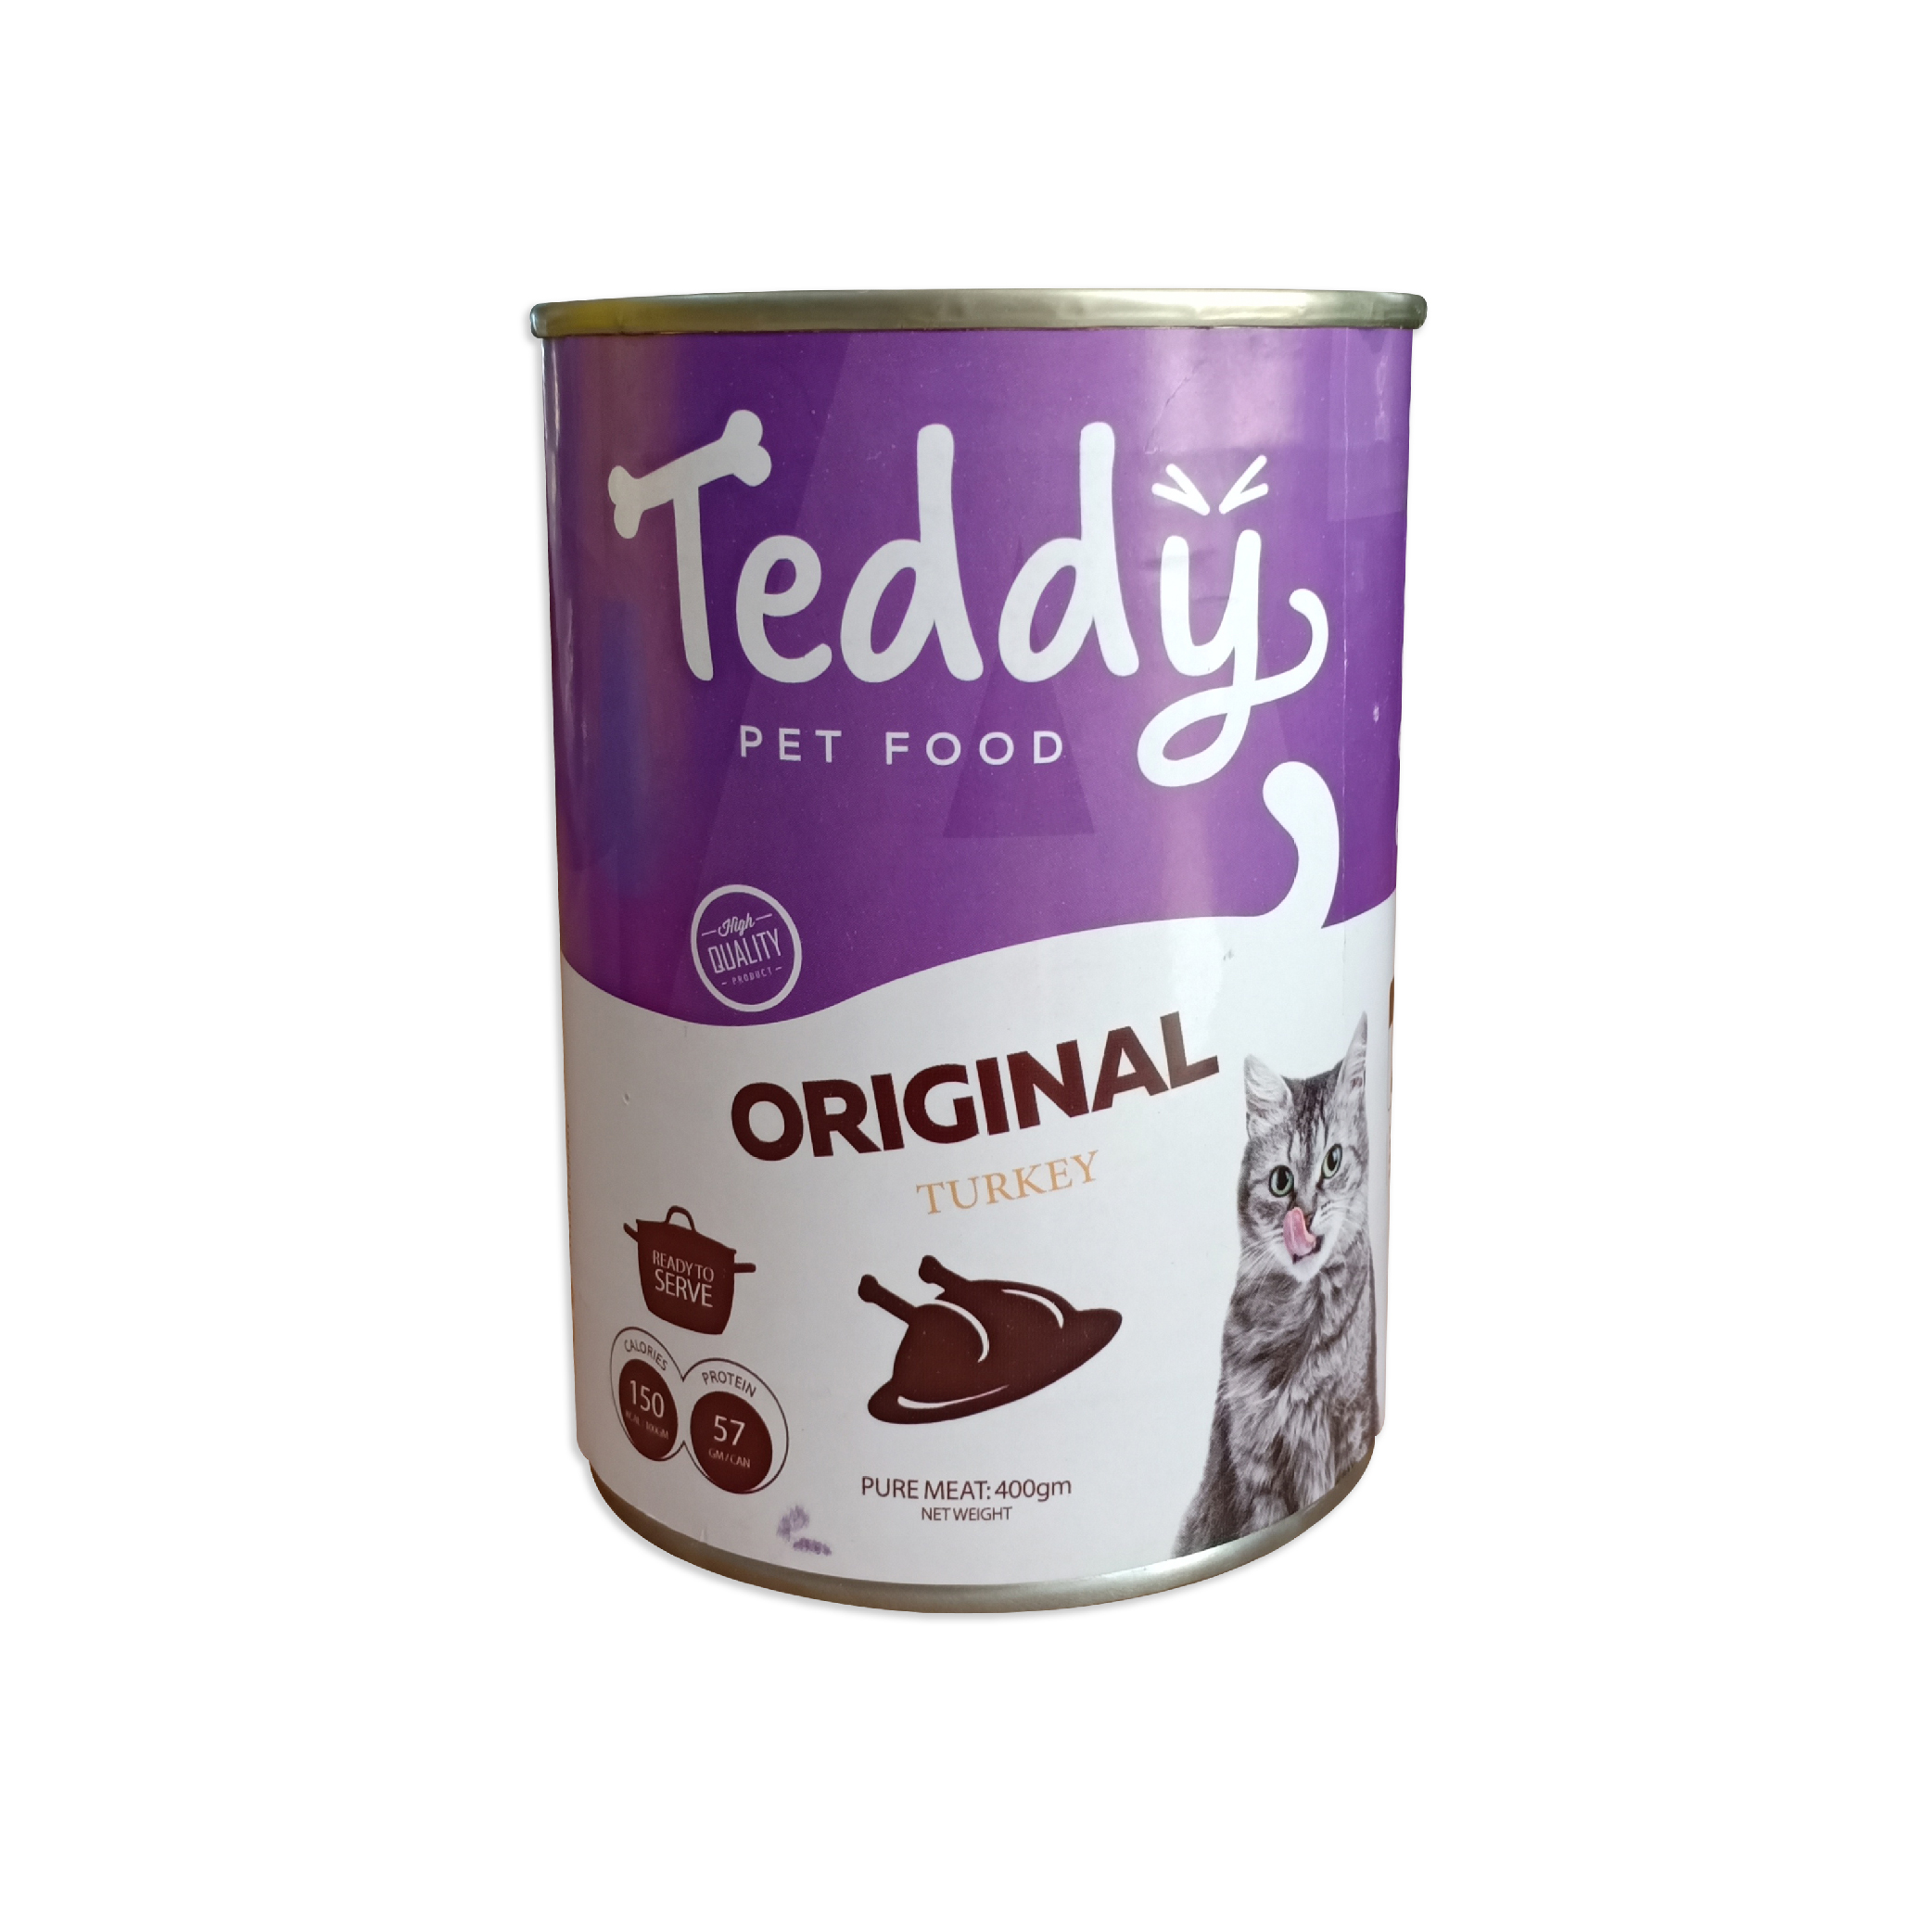 Teddy Original Turkey For Cats 400g